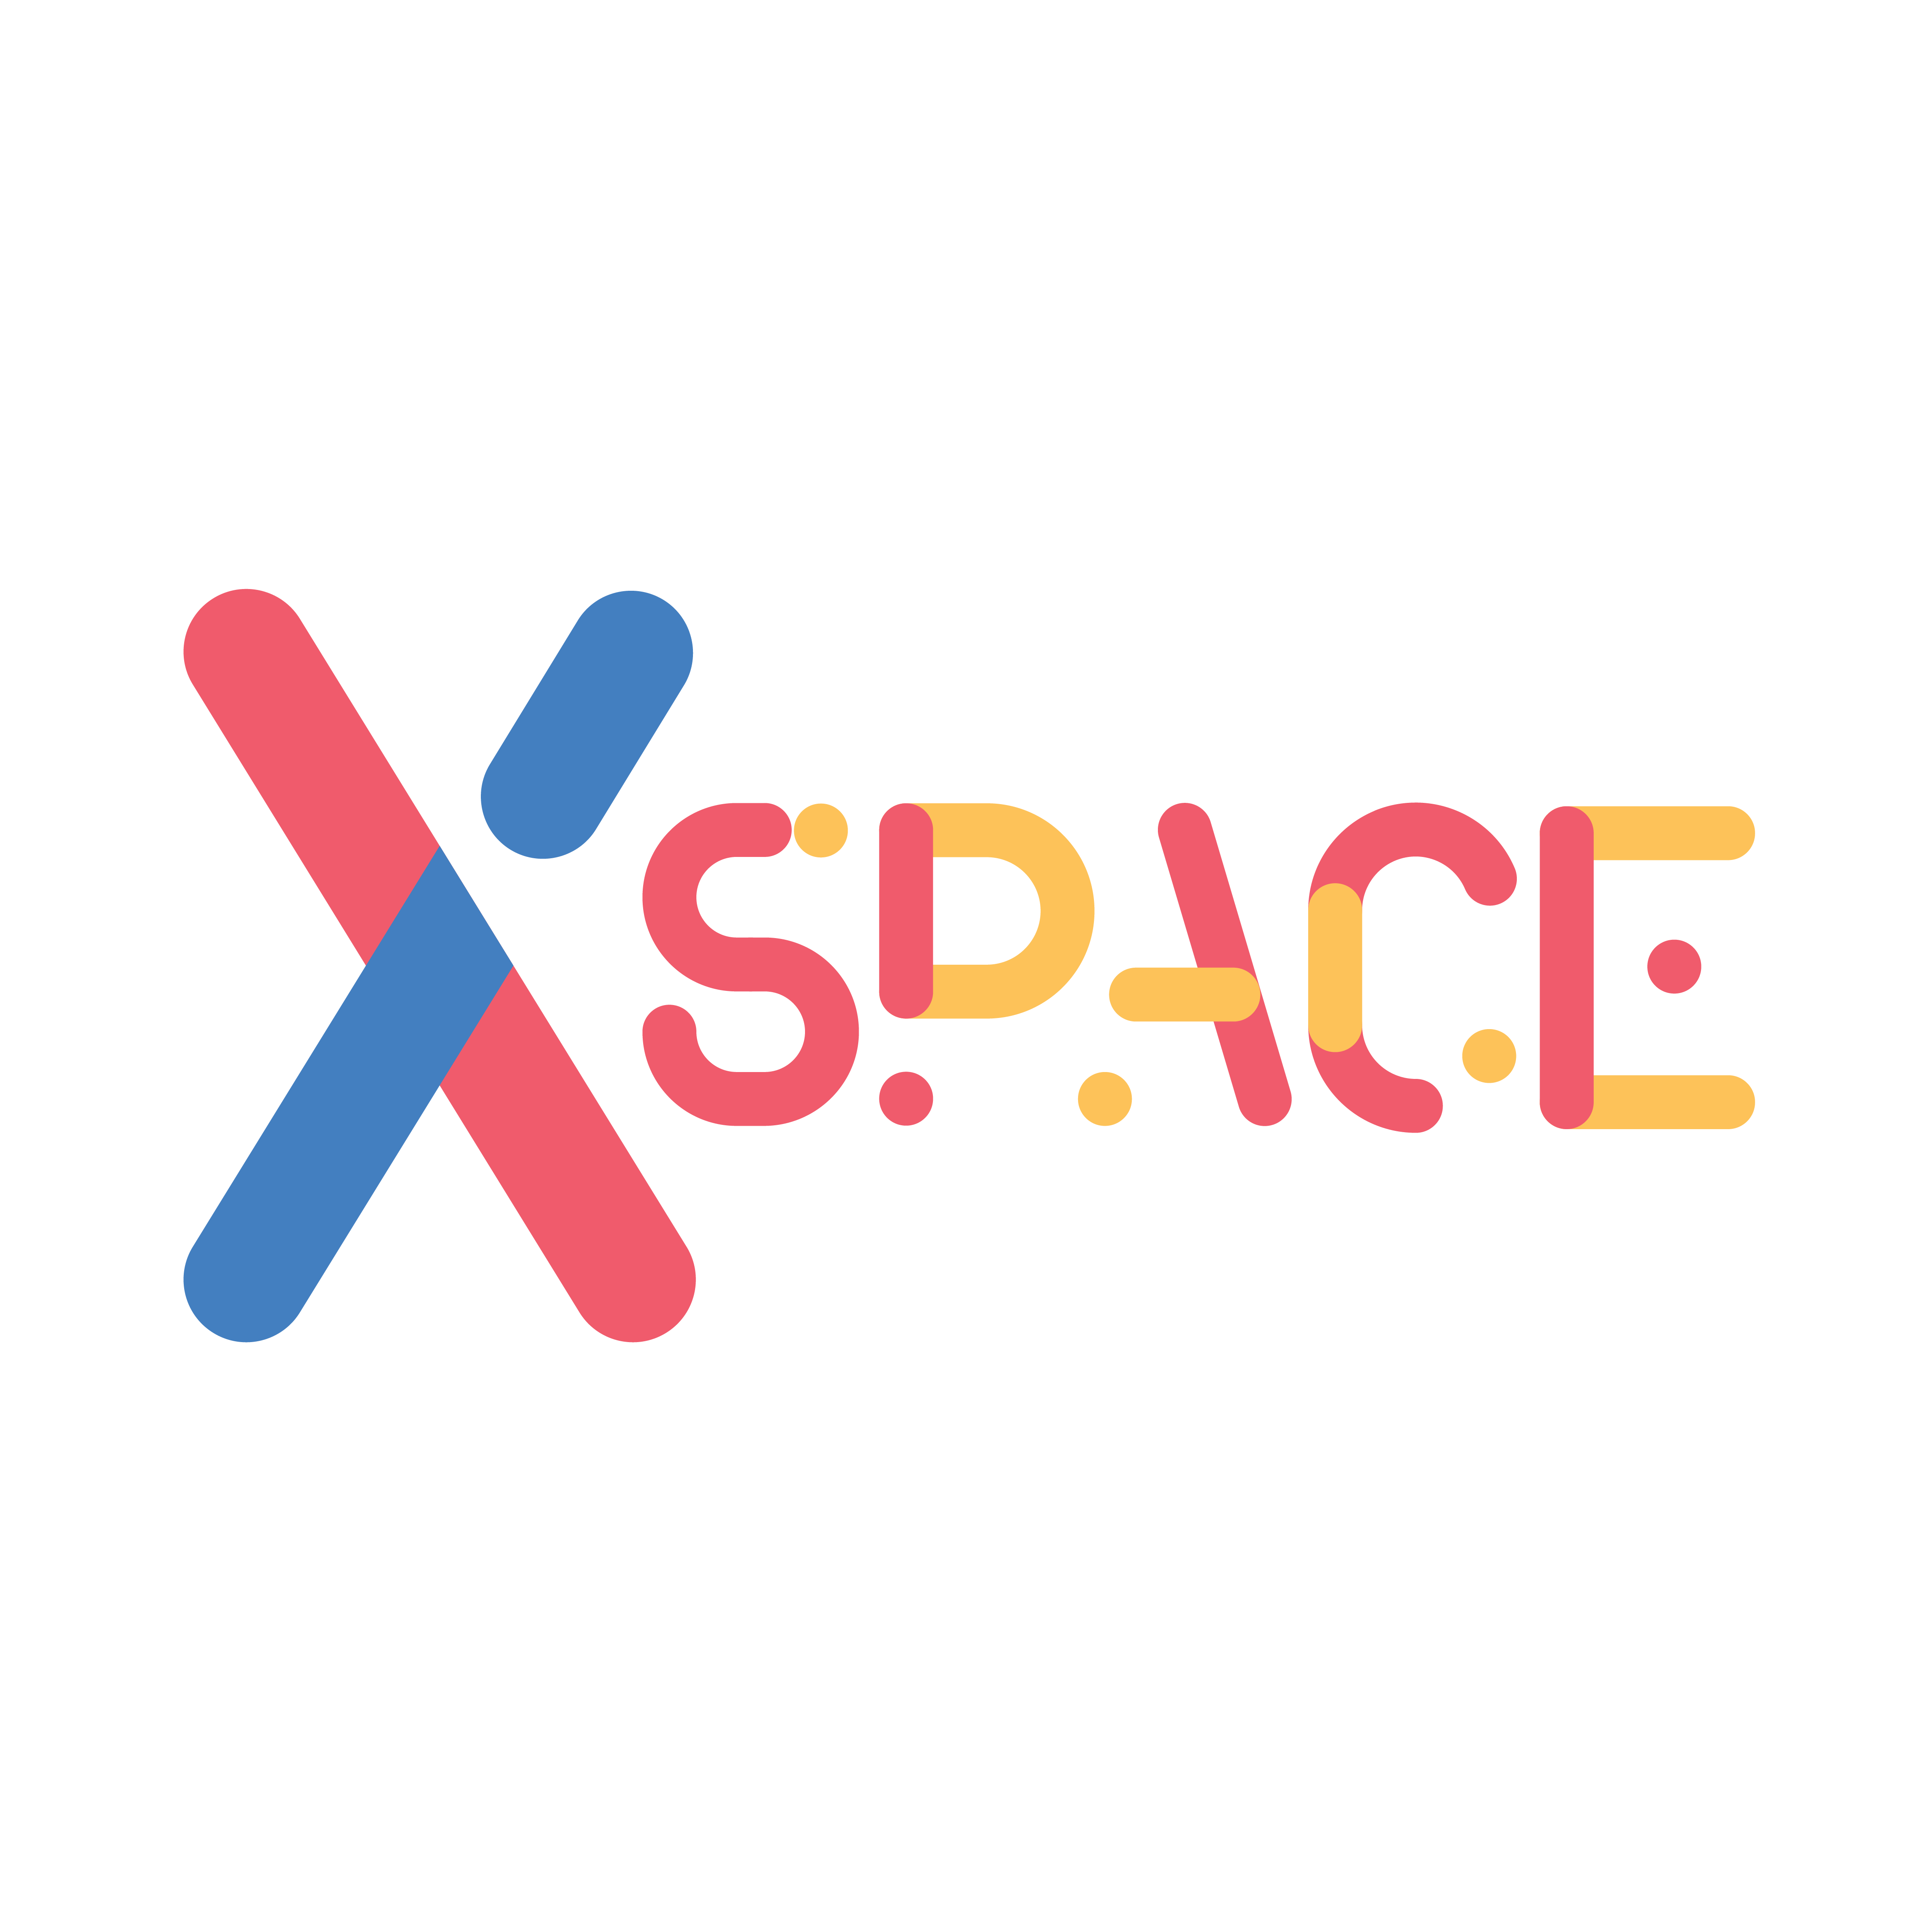 Xspace